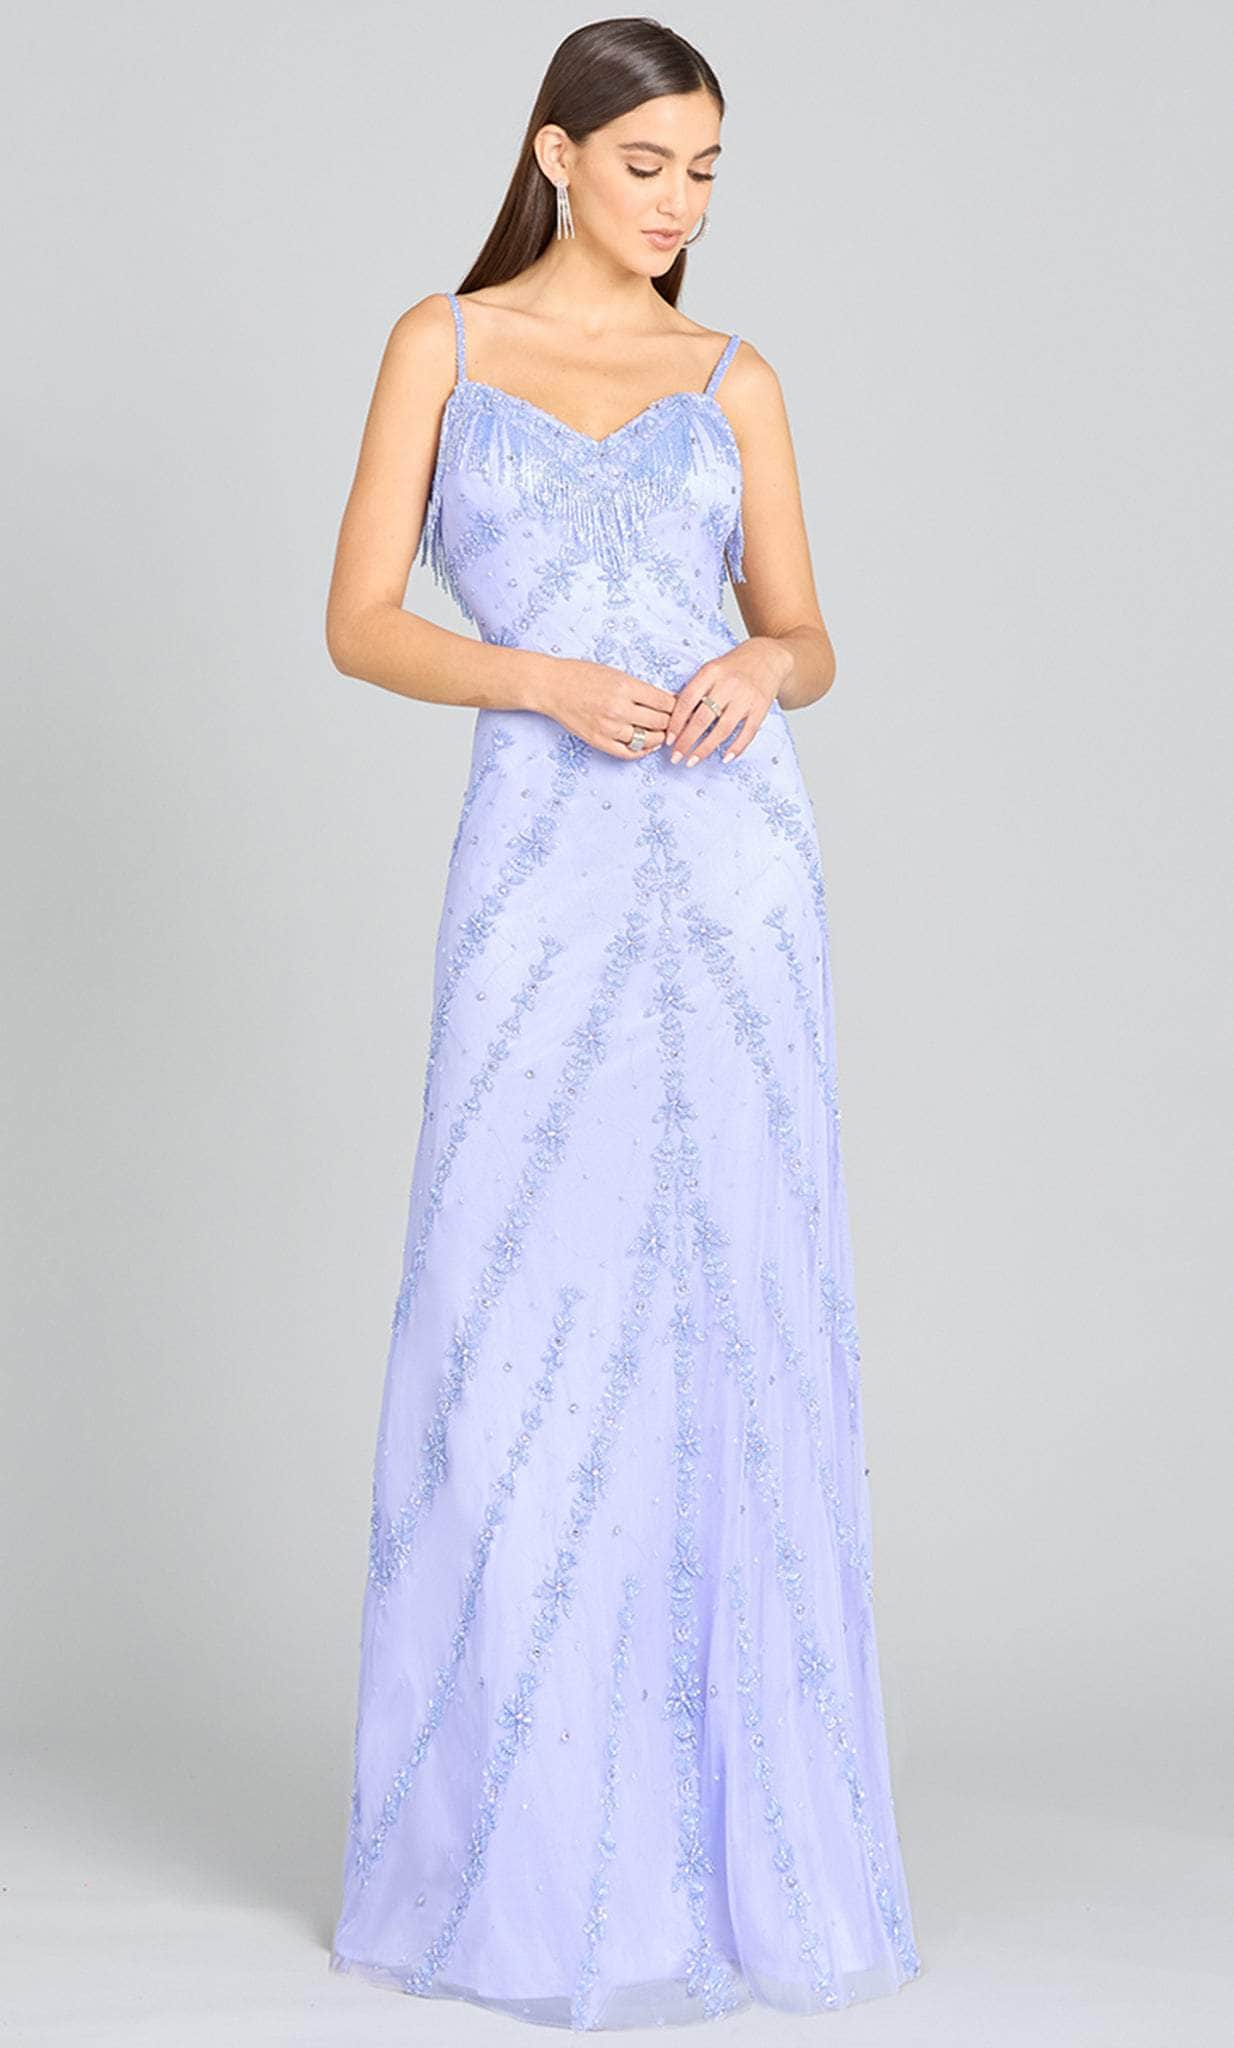 Image of Lara Dresses 9980 - Beaded Sheath Prom Dress